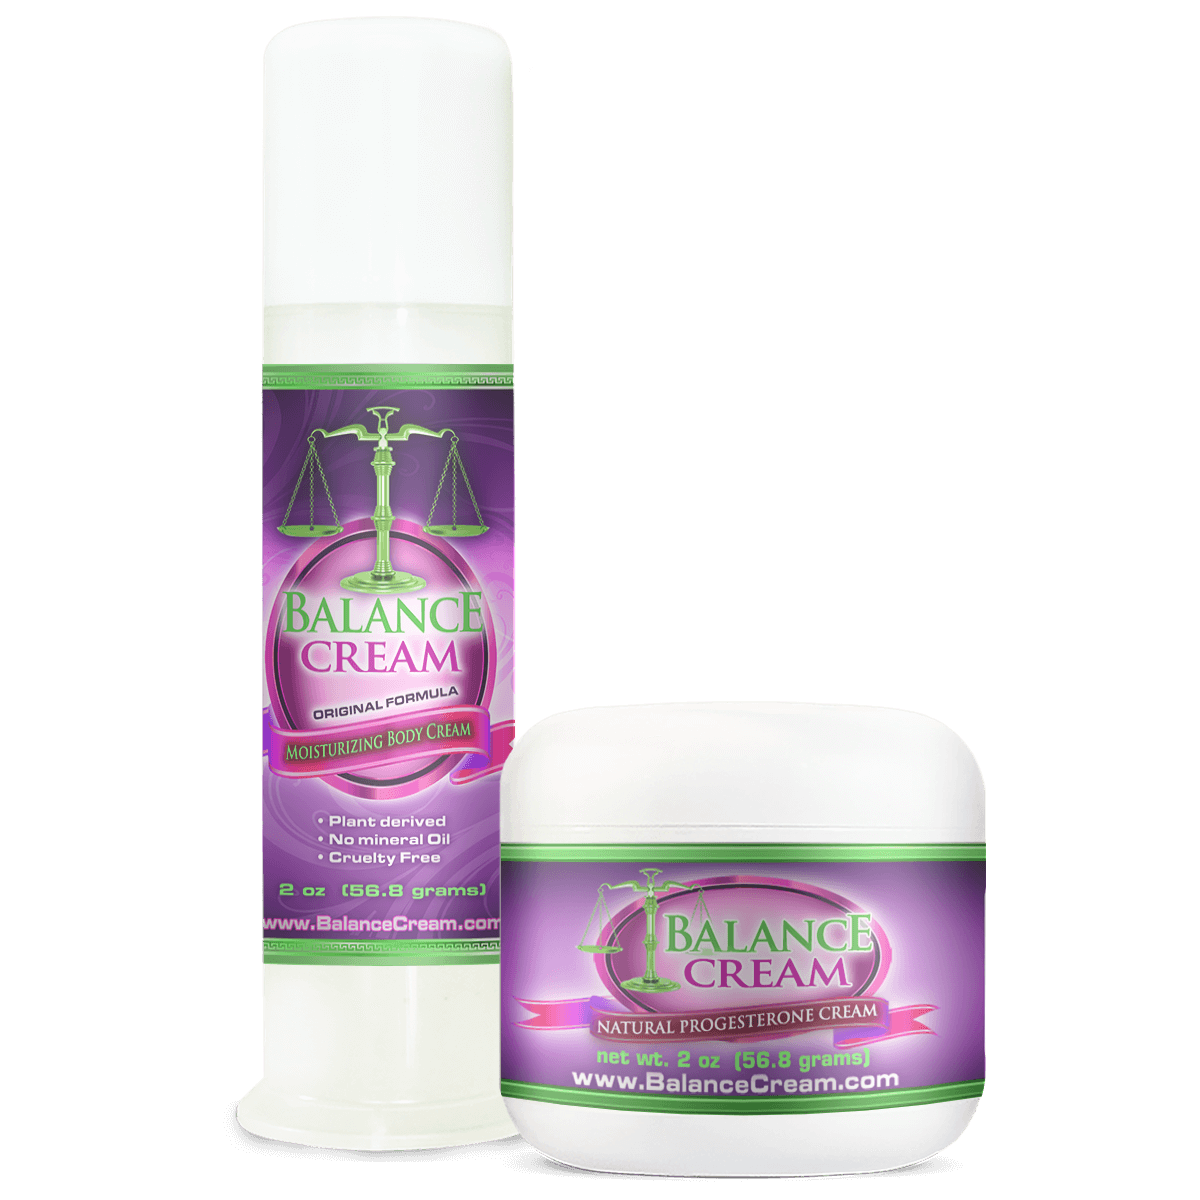 Best Natural Progesterone Cream for Hormone Balance